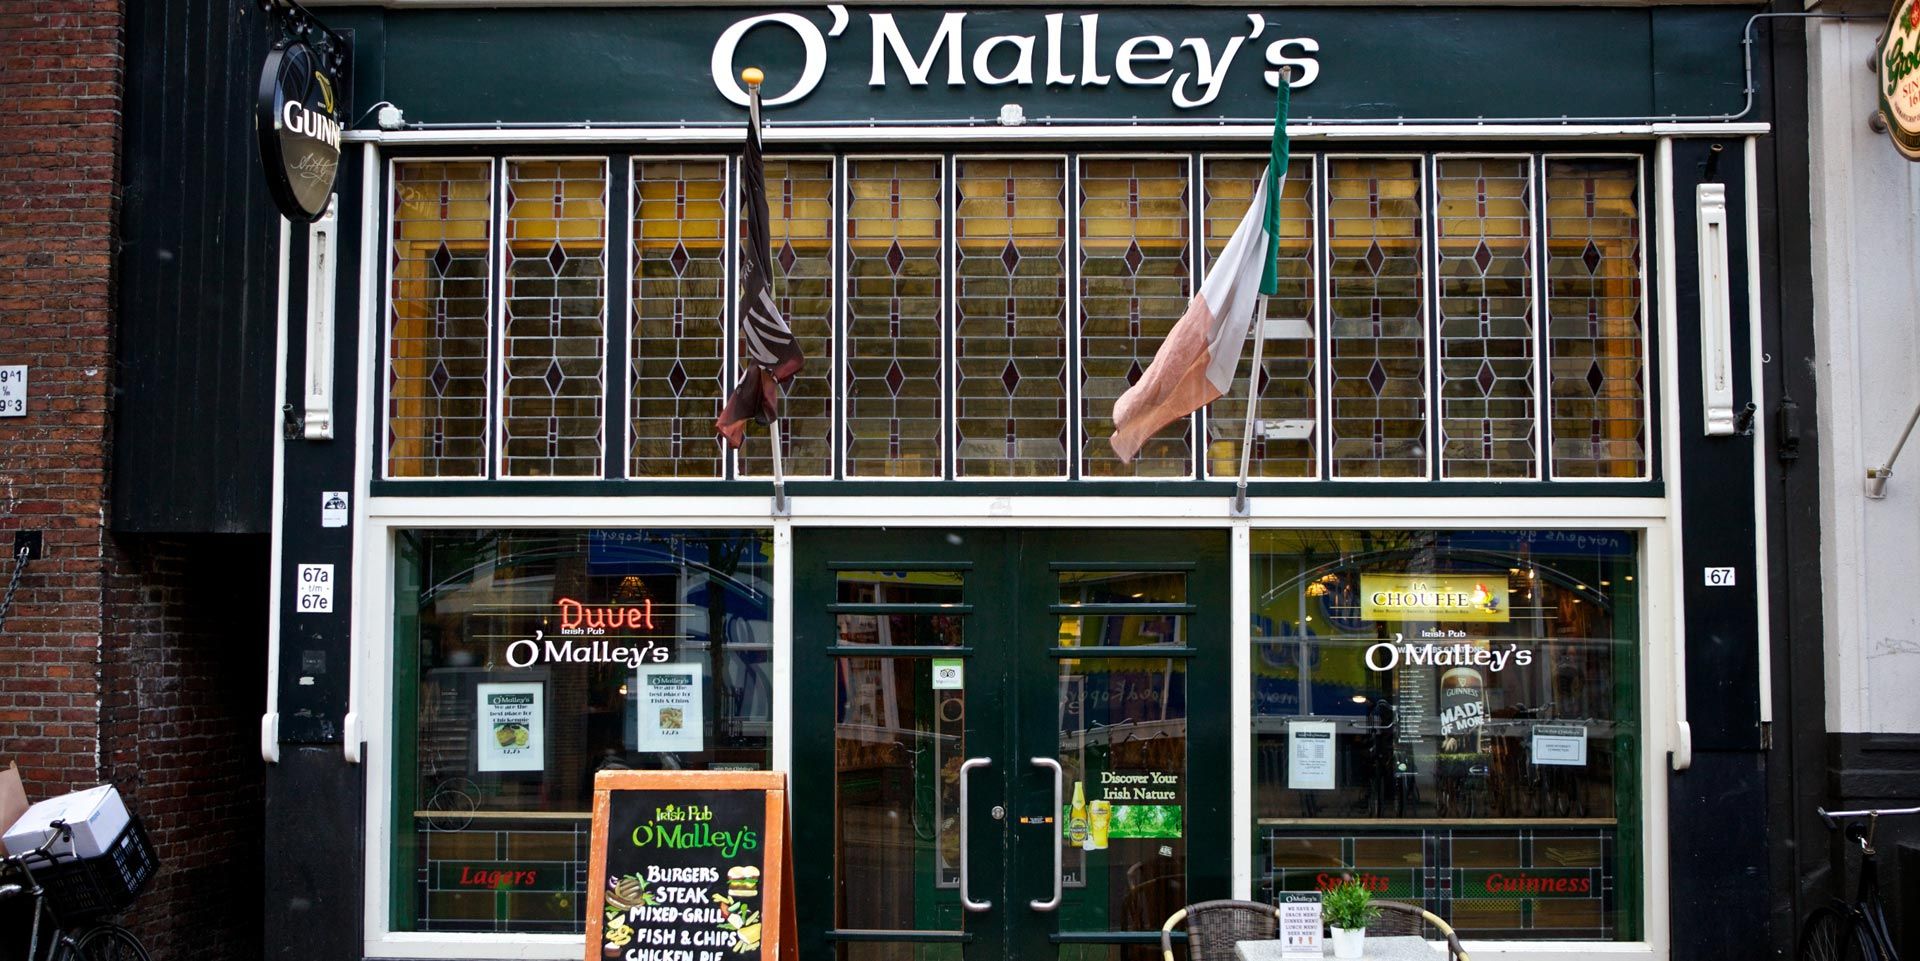 O'Malley's Irish Pub & Restaurant photo via facebook